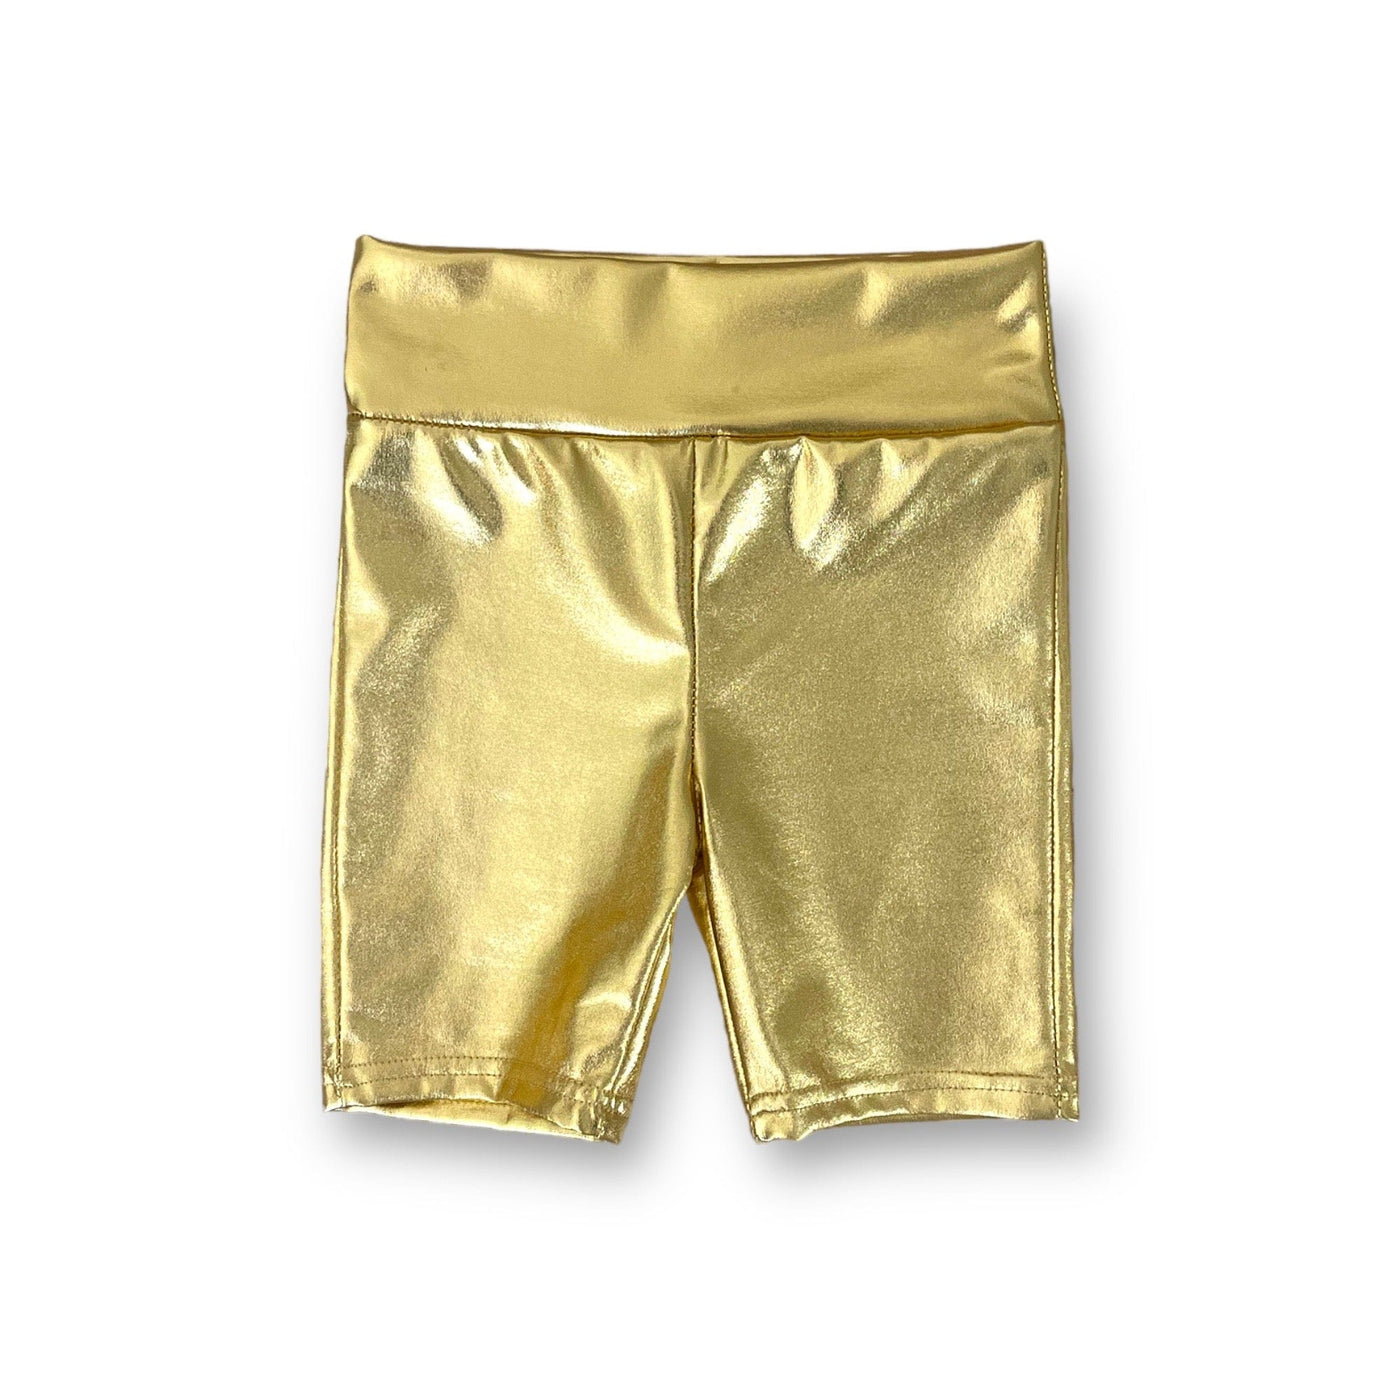 Best Day Ever Kids Baby & Toddler Bottoms 6-12m / Gold Shiny Biker Short buy online boutique kids clothing